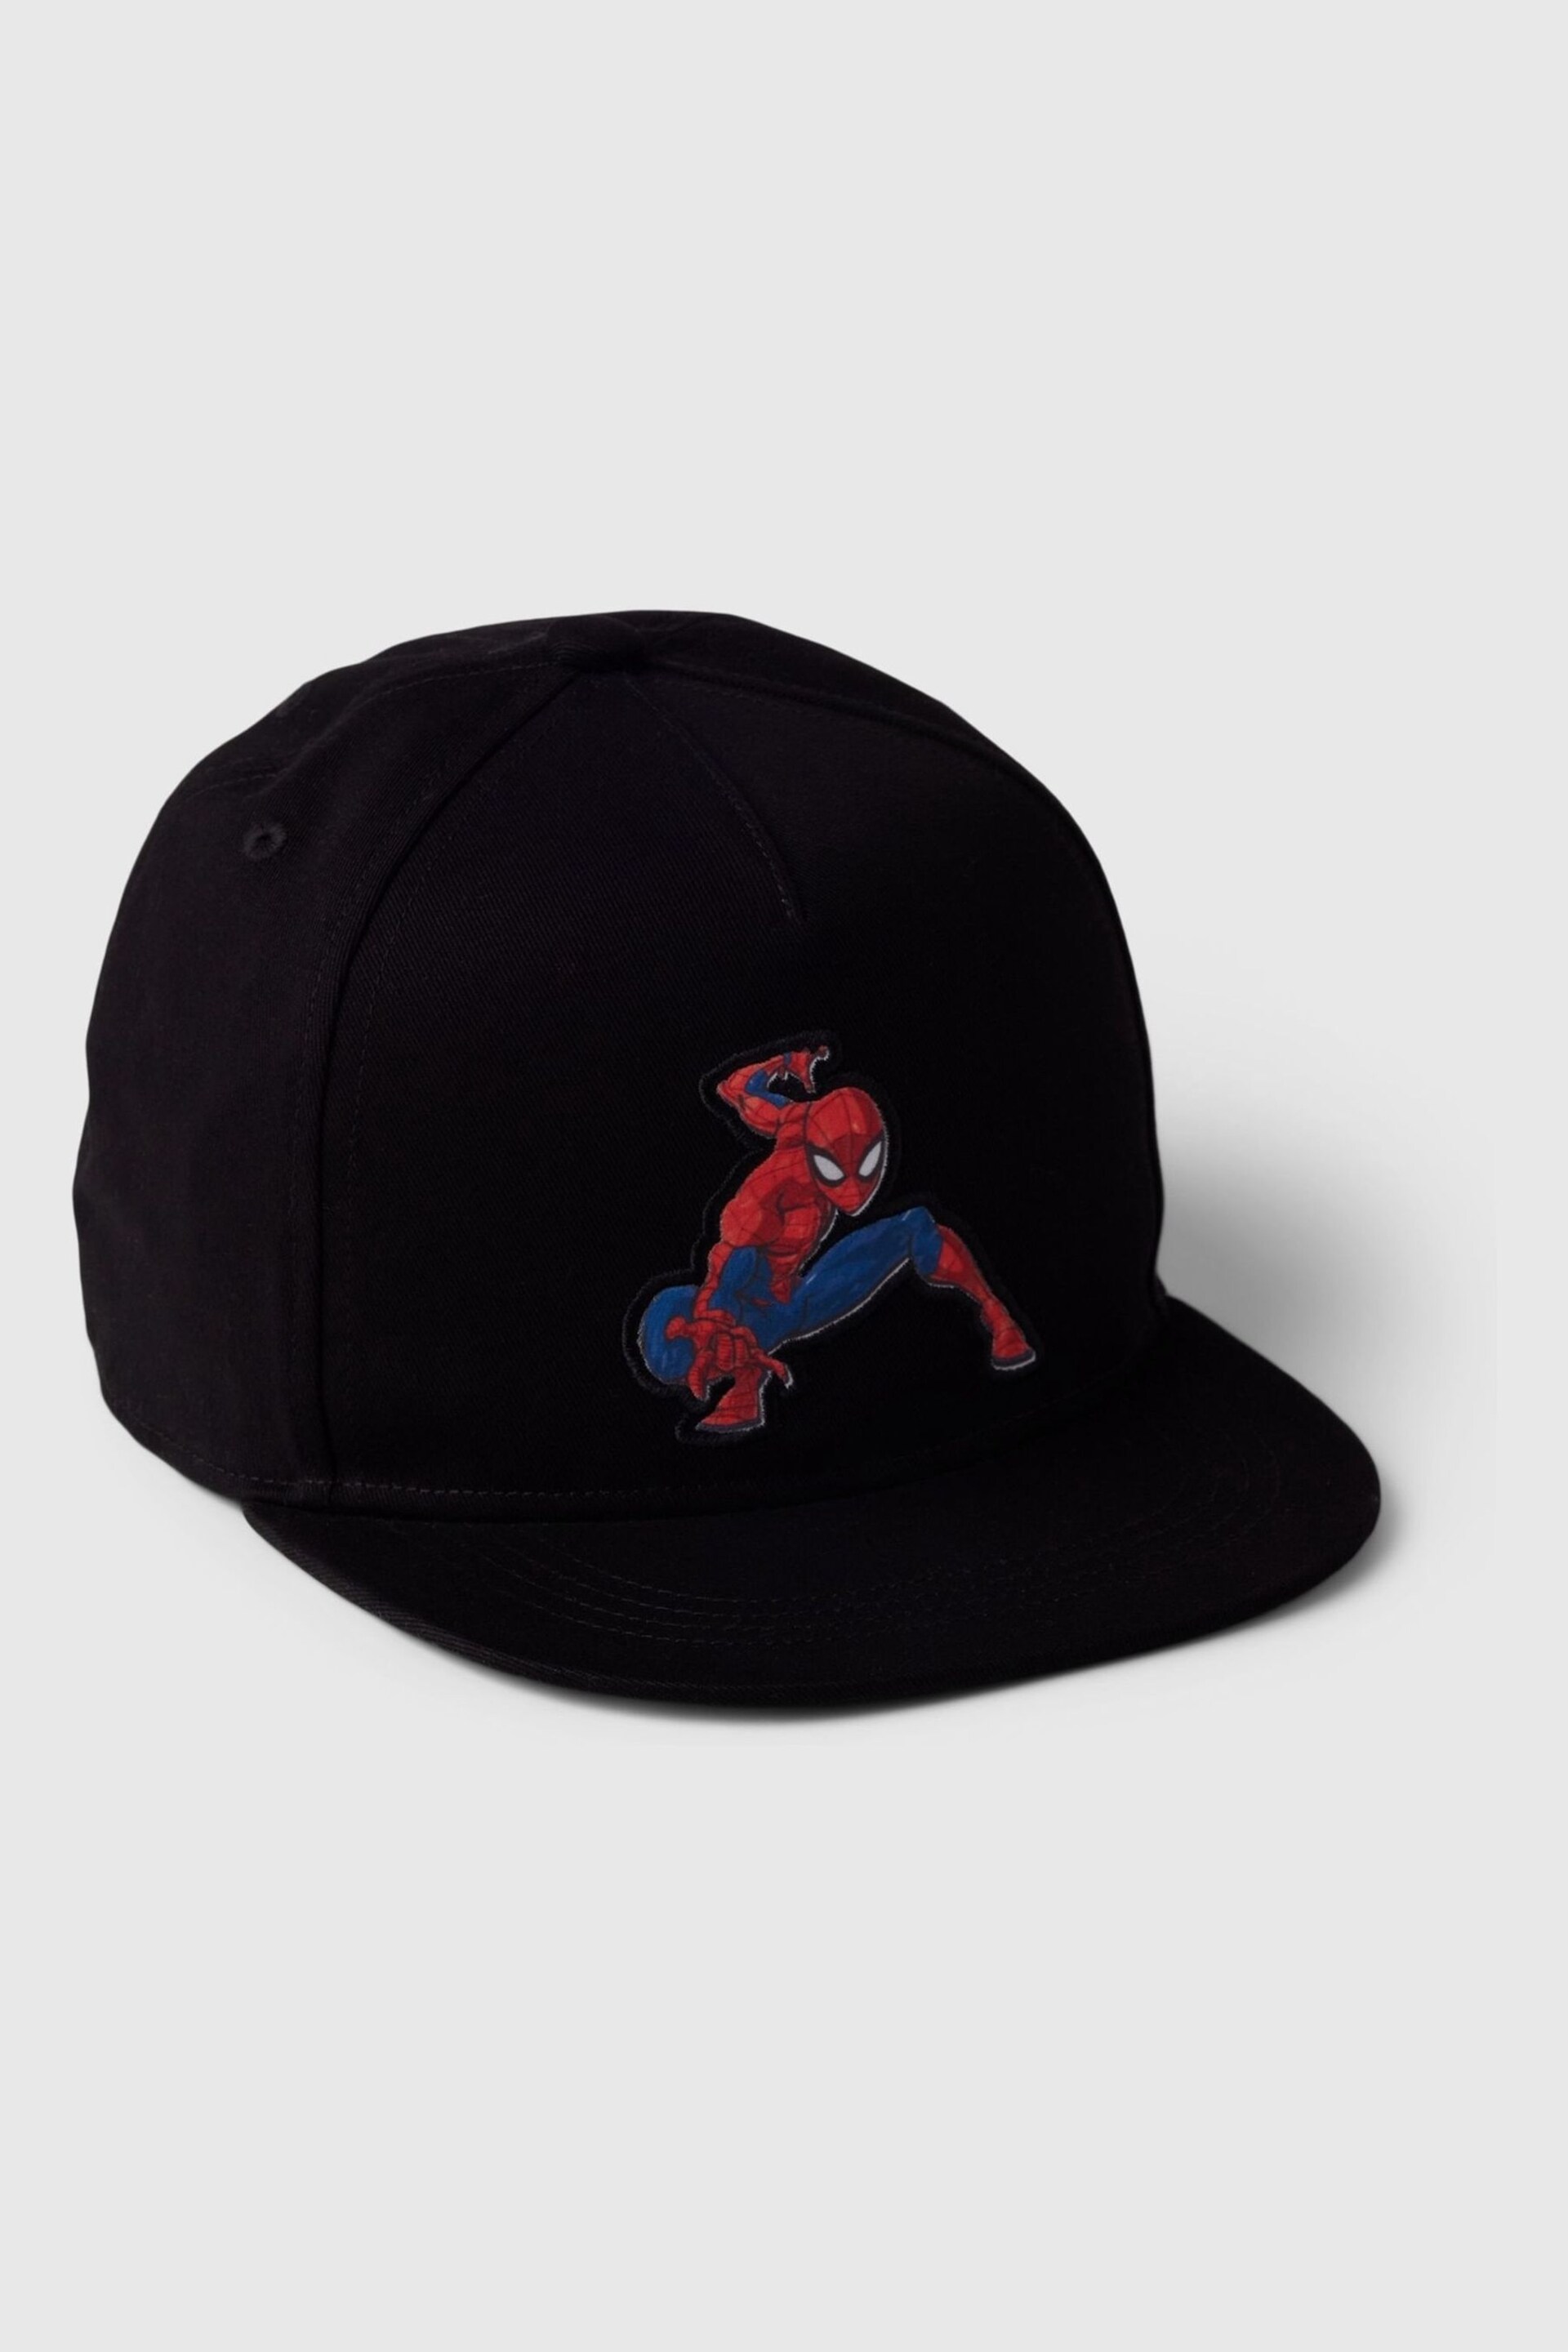 Gap Black Marvel Spiderman Baseball Hat - Image 1 of 1